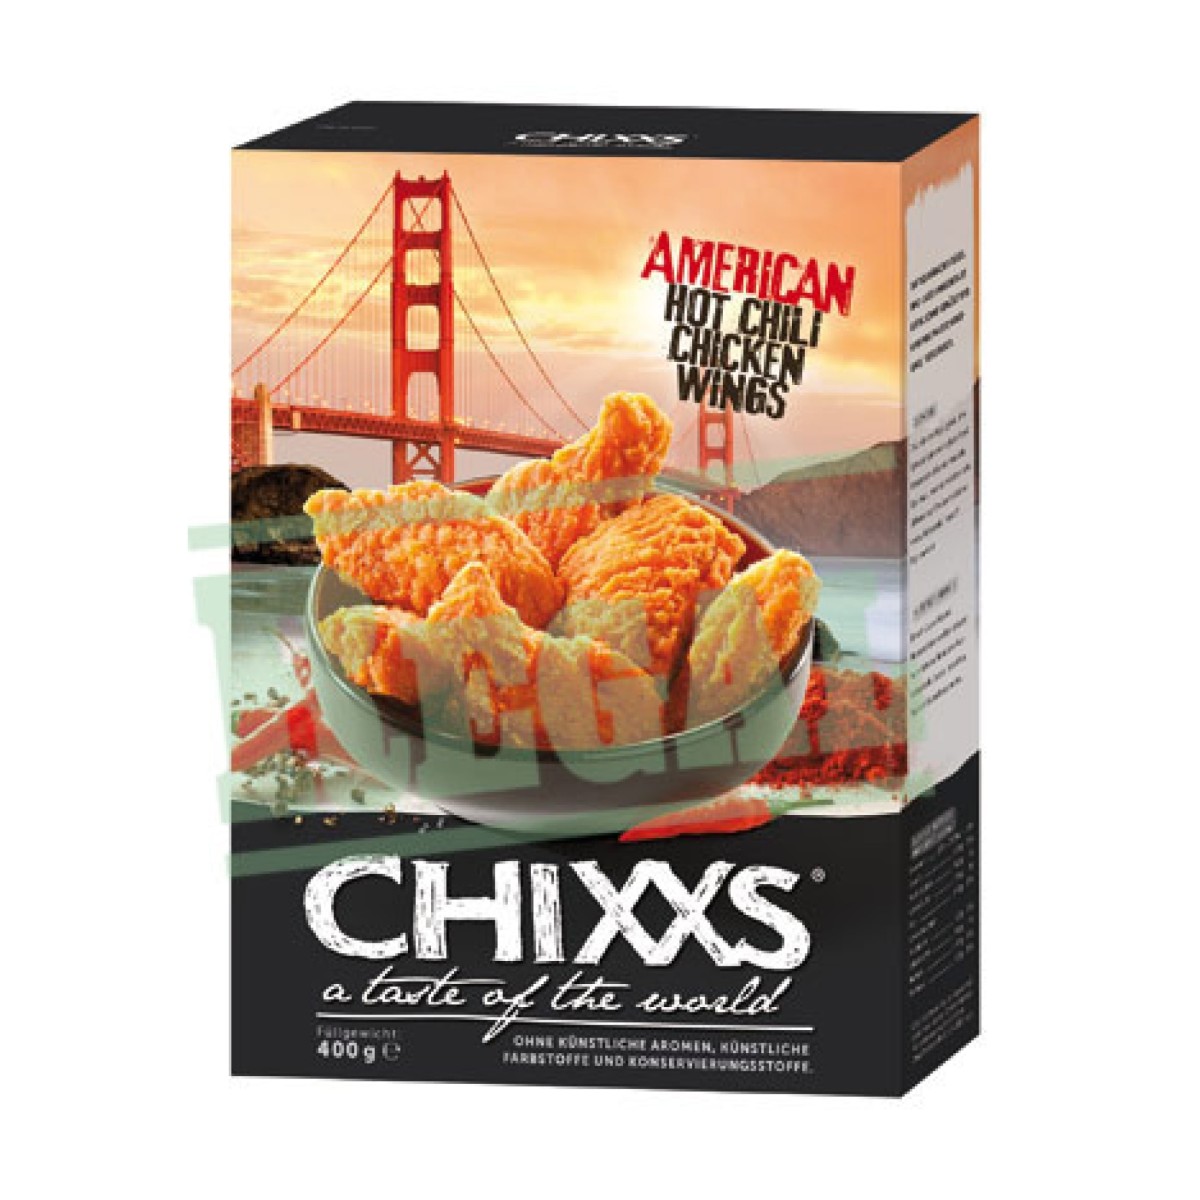 CHIXXS Chicken Chili Hot American REGAL → Wings